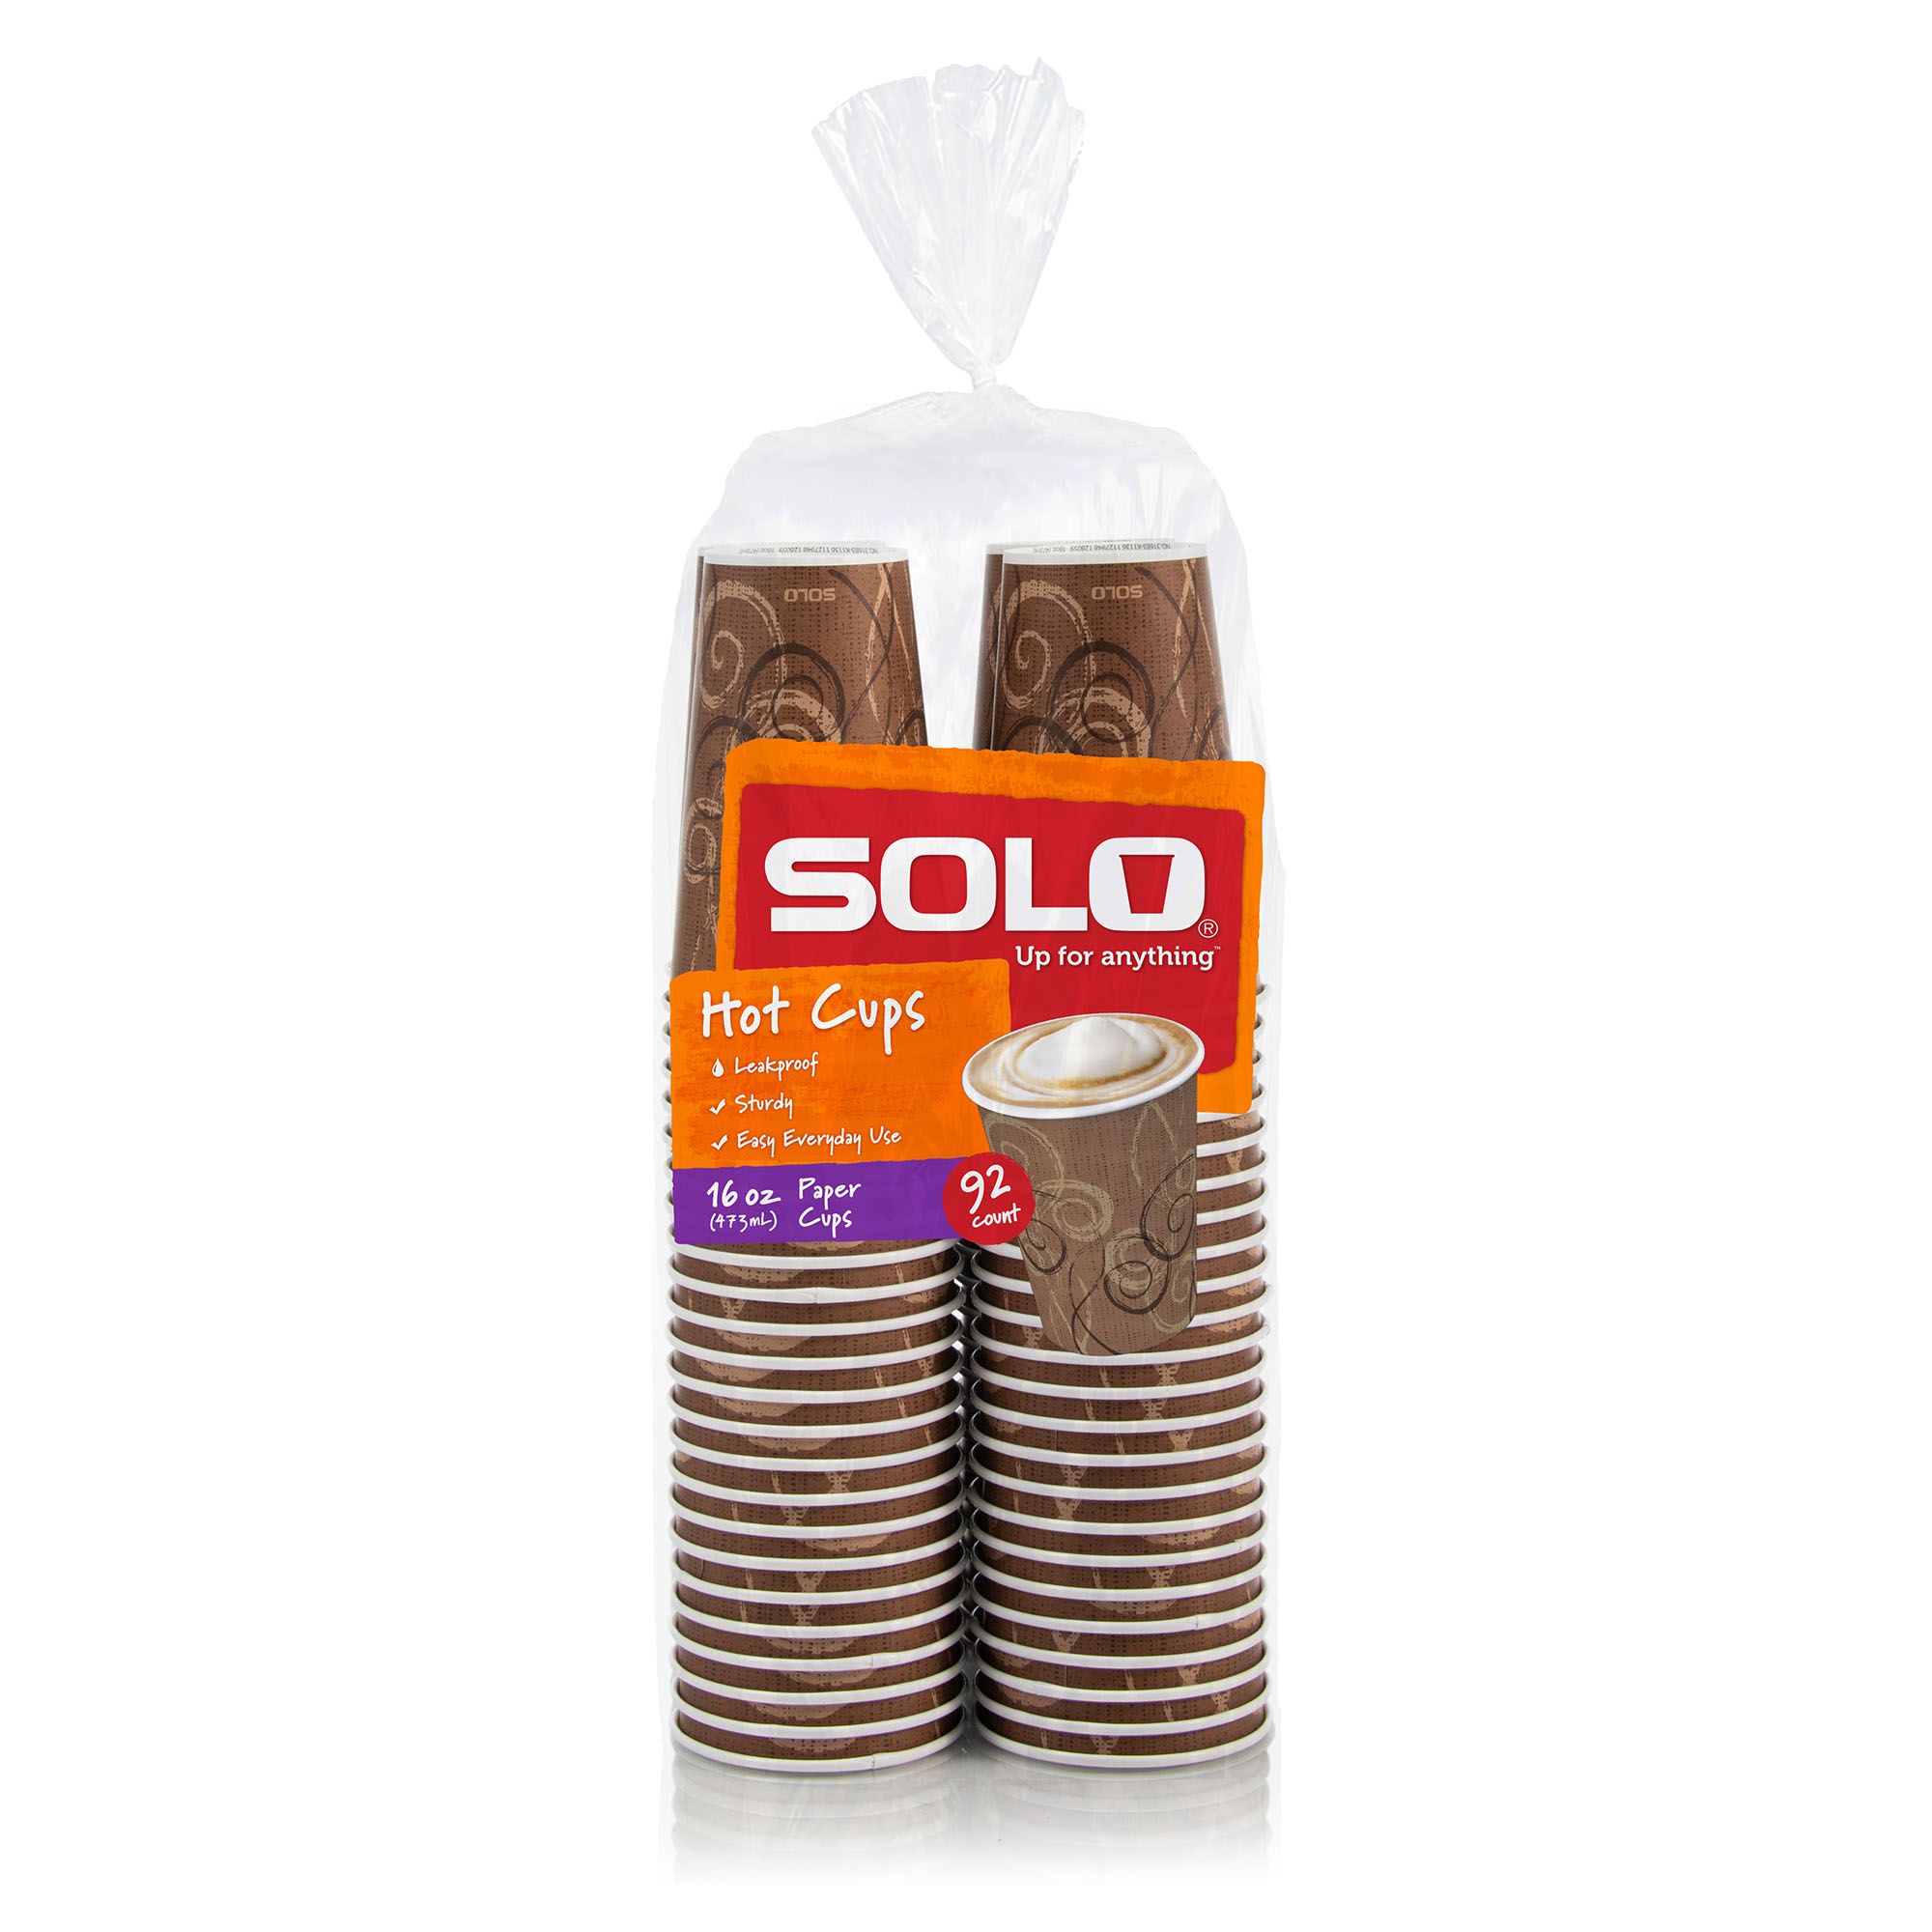 SOLO 16-Oz. Hot Cups, 92 ct.